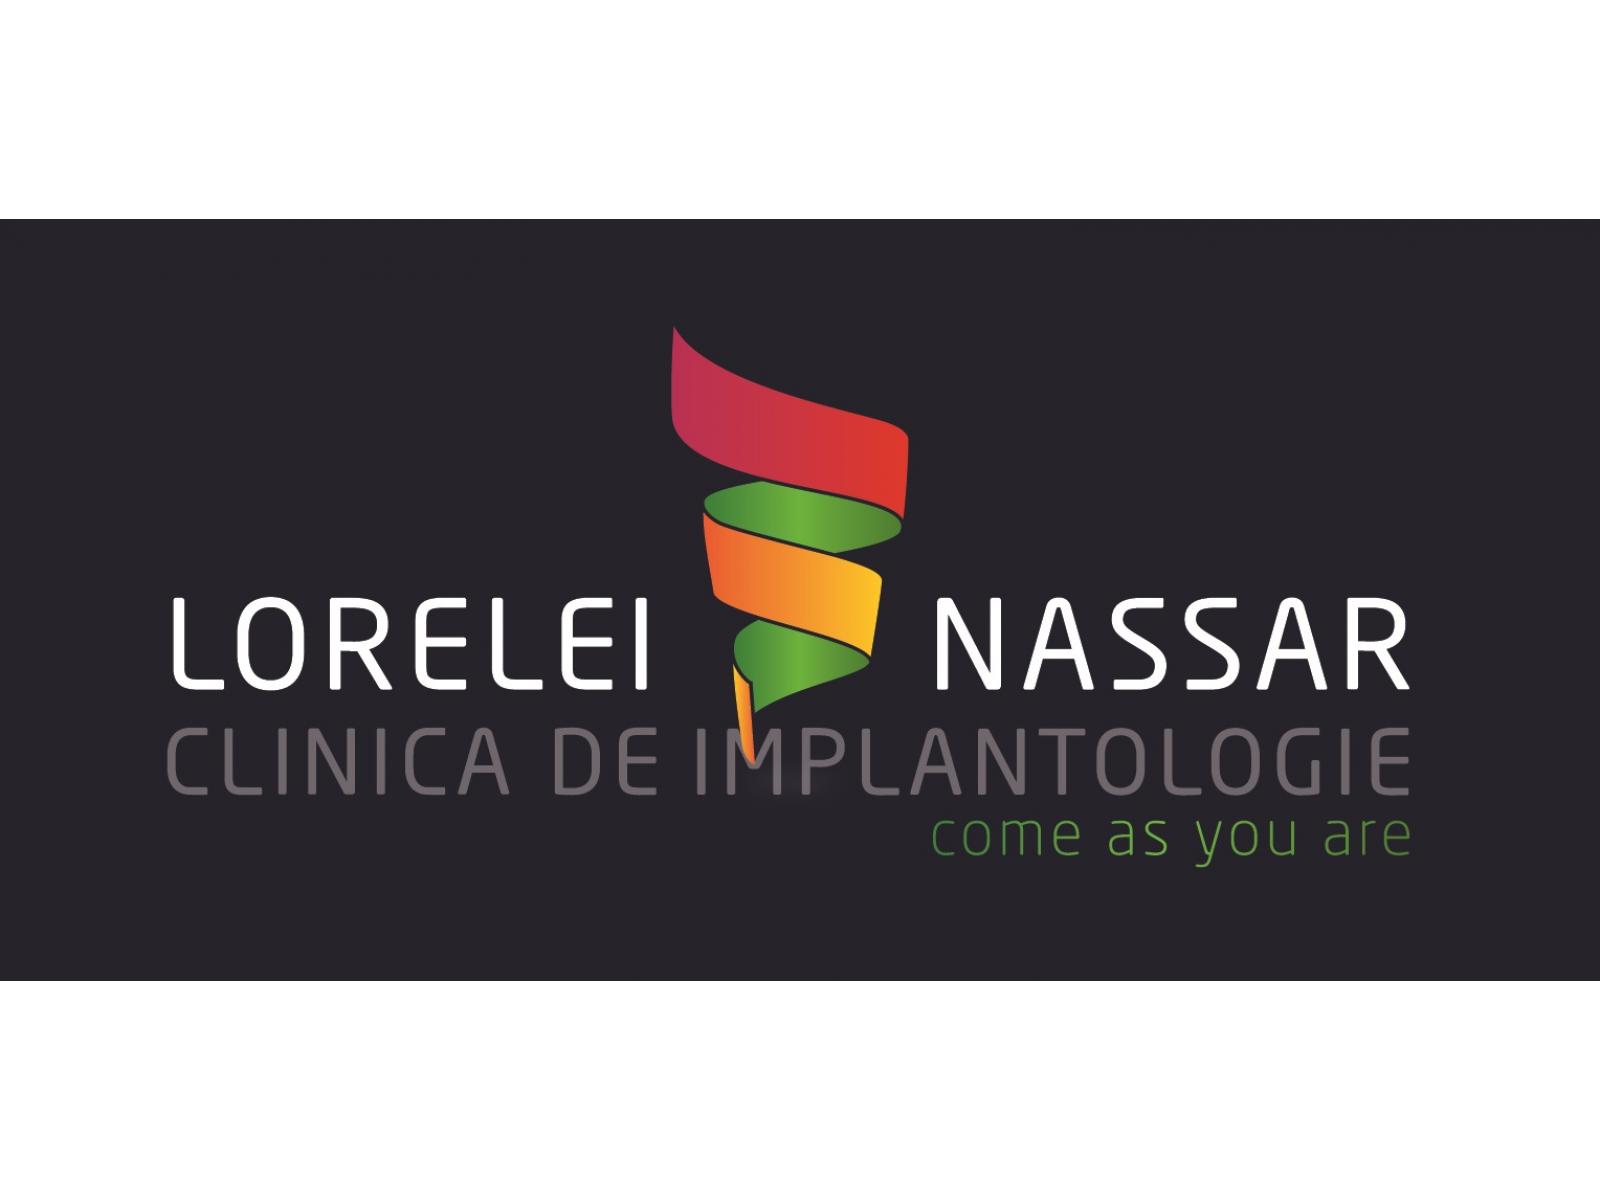 Clinica de implantologie Dr Lorelei Nassar - LN_logo_descriptor_negativ_1_-_Copy.jpg